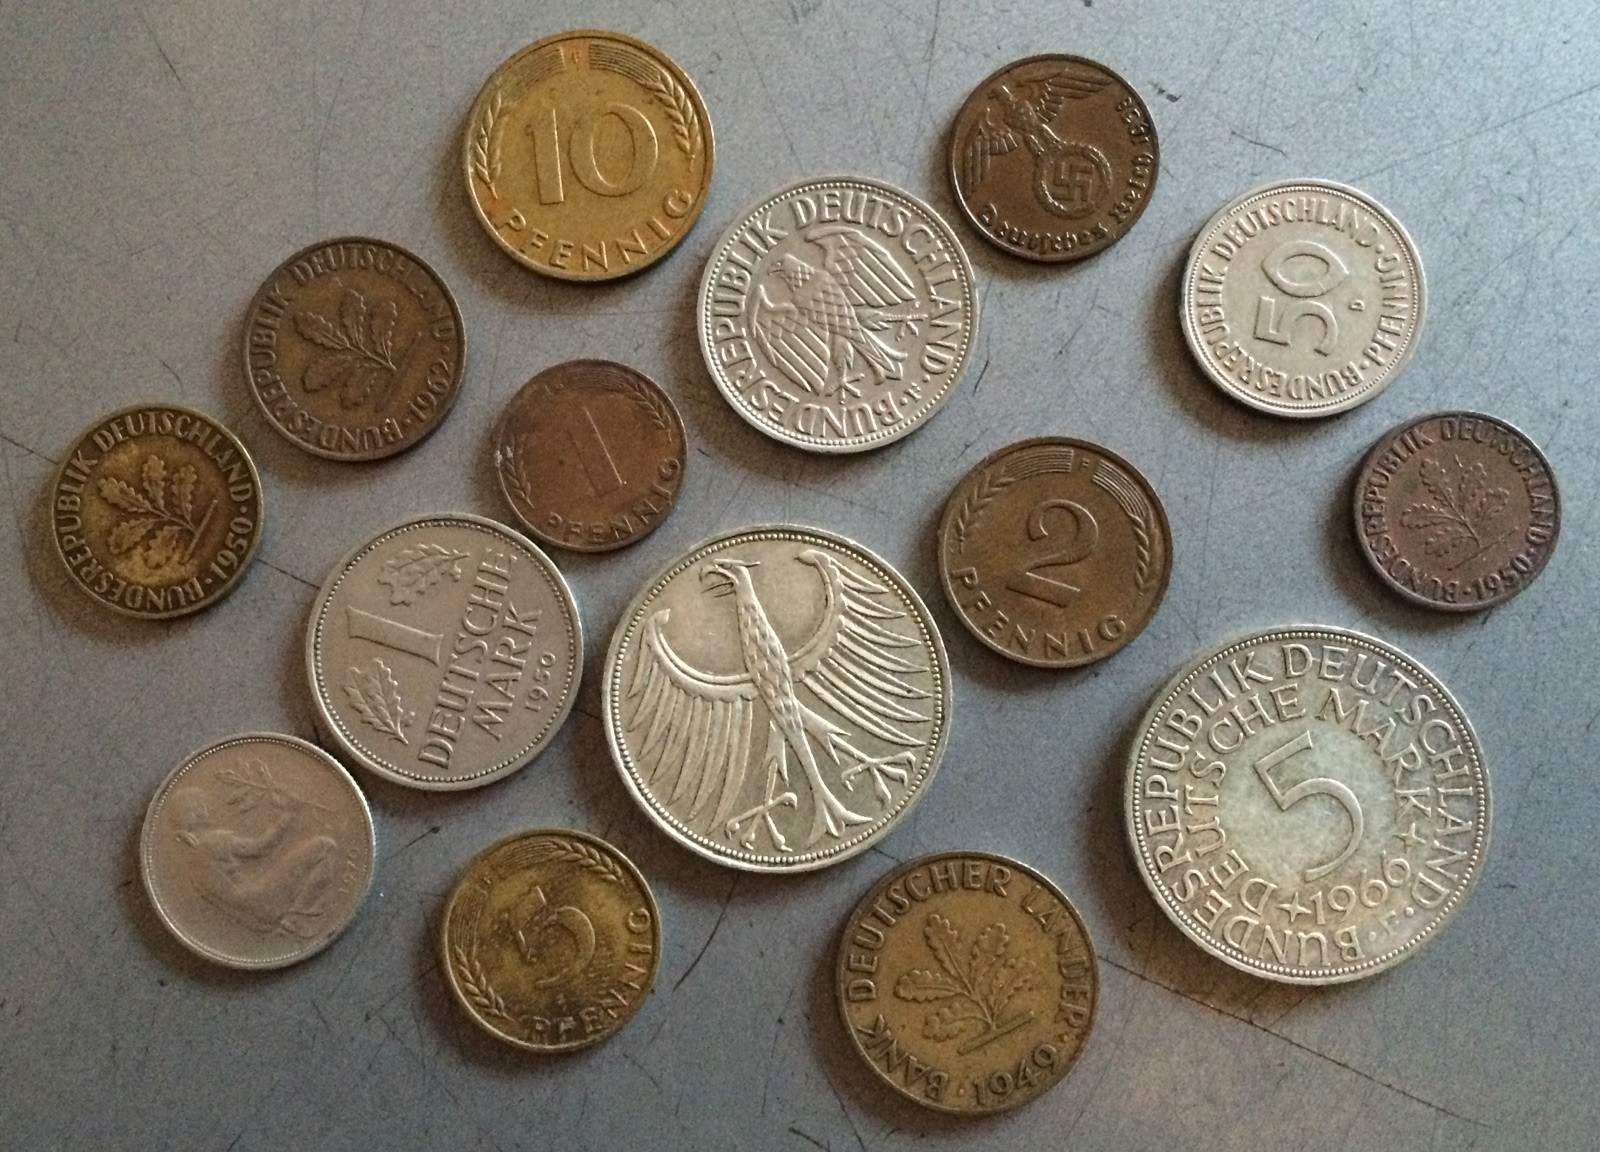 German coins in circulation 1959